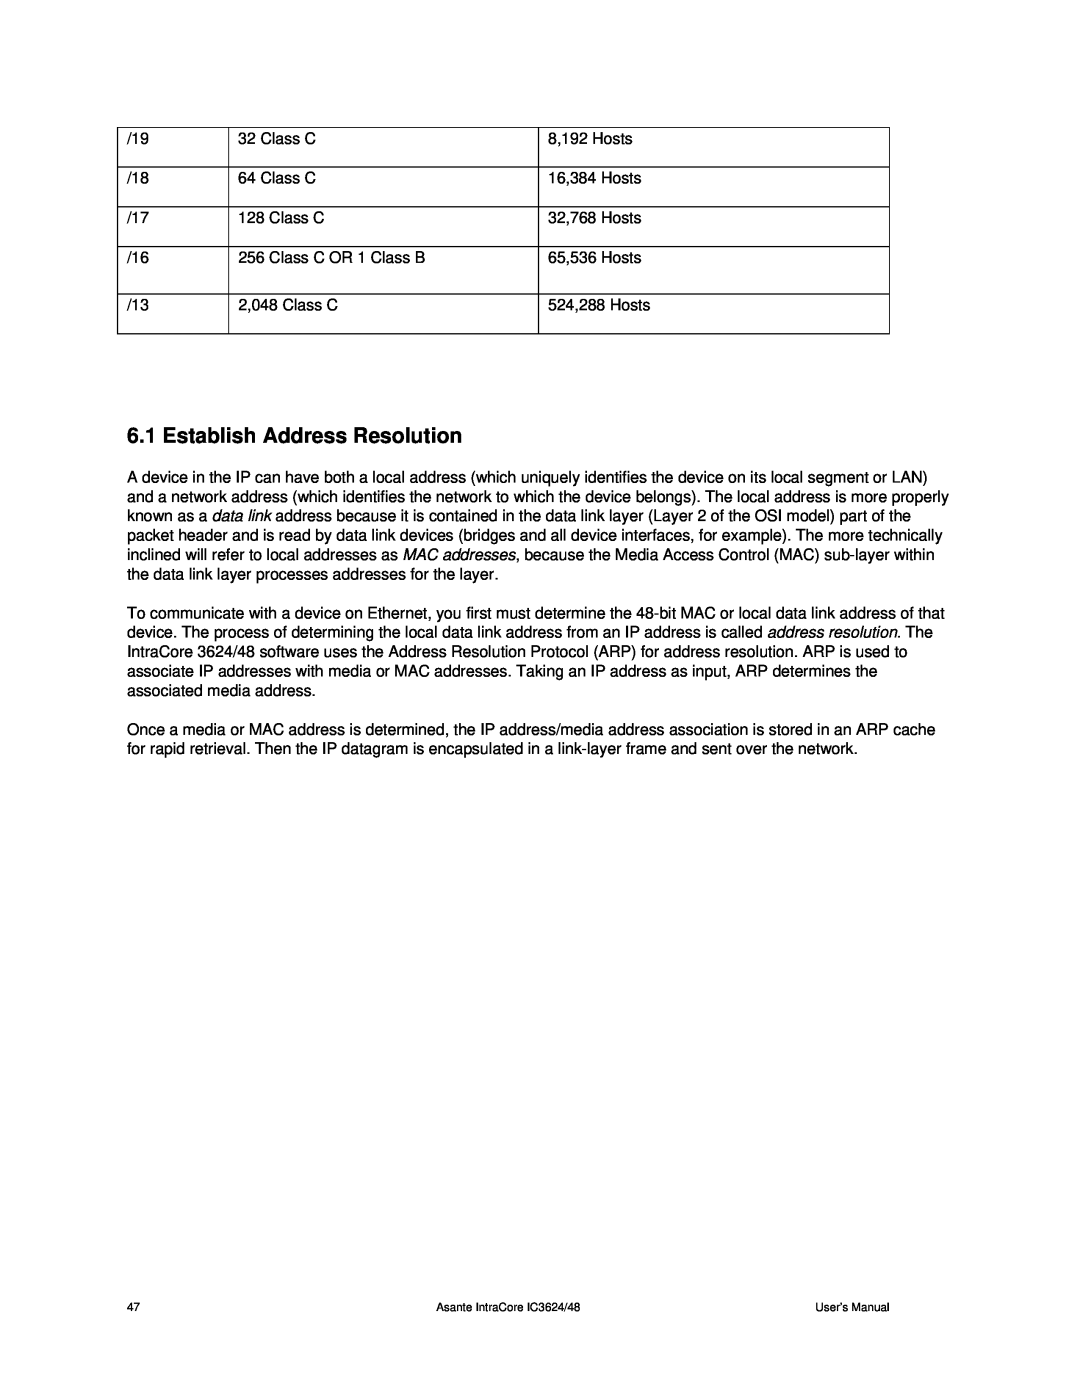 Asante Technologies 3624/48 user manual Establish Address Resolution 